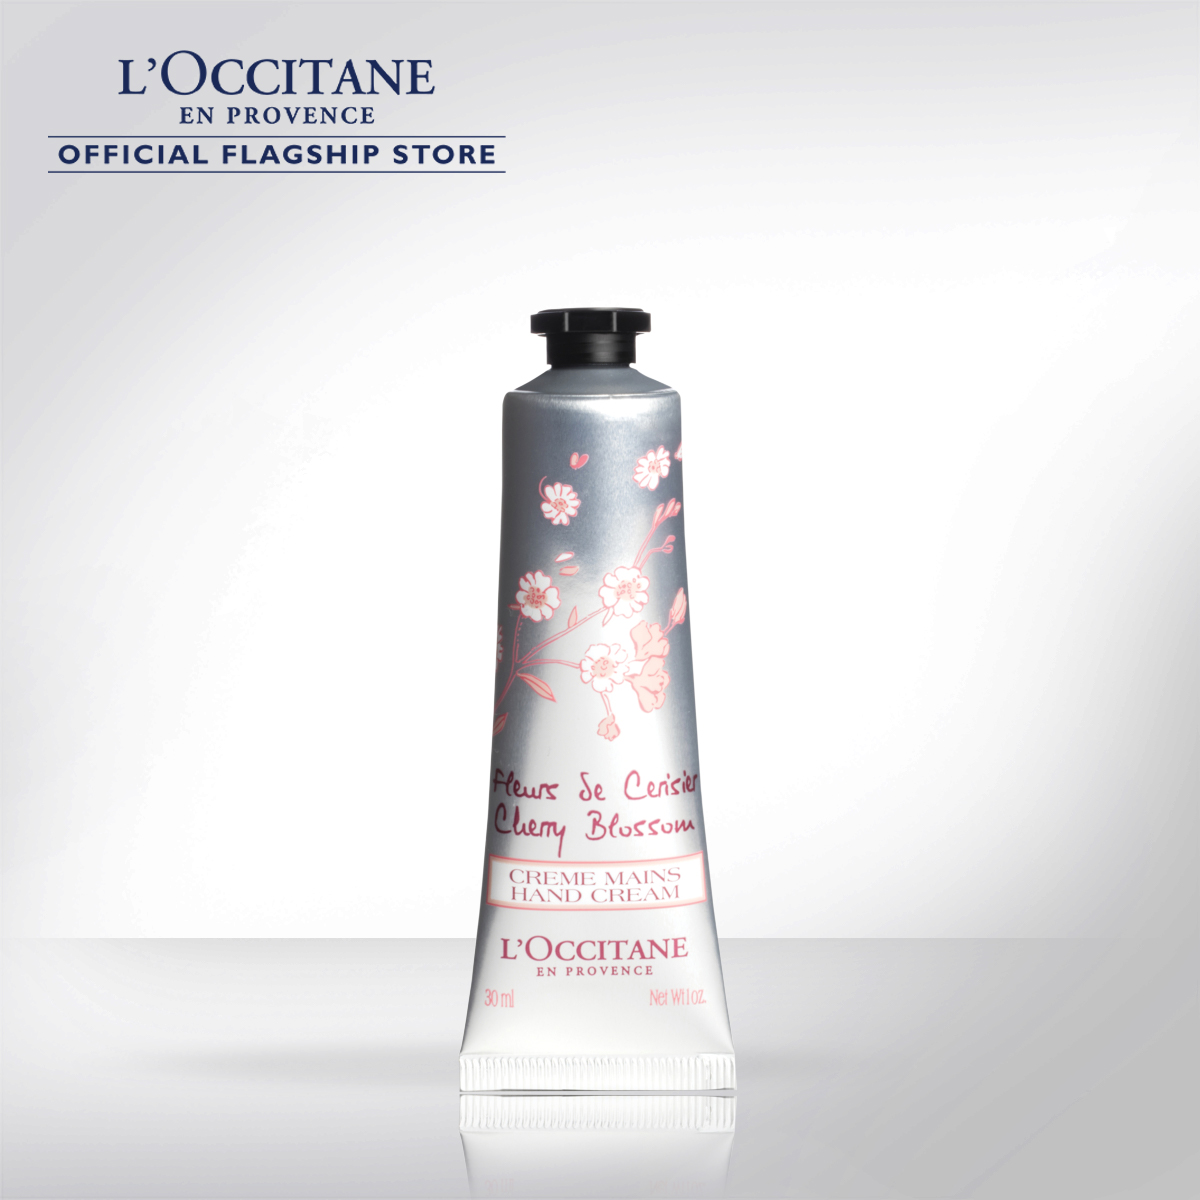 L'Occitane Cherry Blossom Hand Cream 30ml ล็อกซิทาน ครีมทามือ เชอร์รี่ บลอสซัม แฮนด์ครีม 30 มล. (ผิวมือ, ผิวนุ่ม, ผิวฝ่ามือ, มือ, เชีย บัตเตอร์)